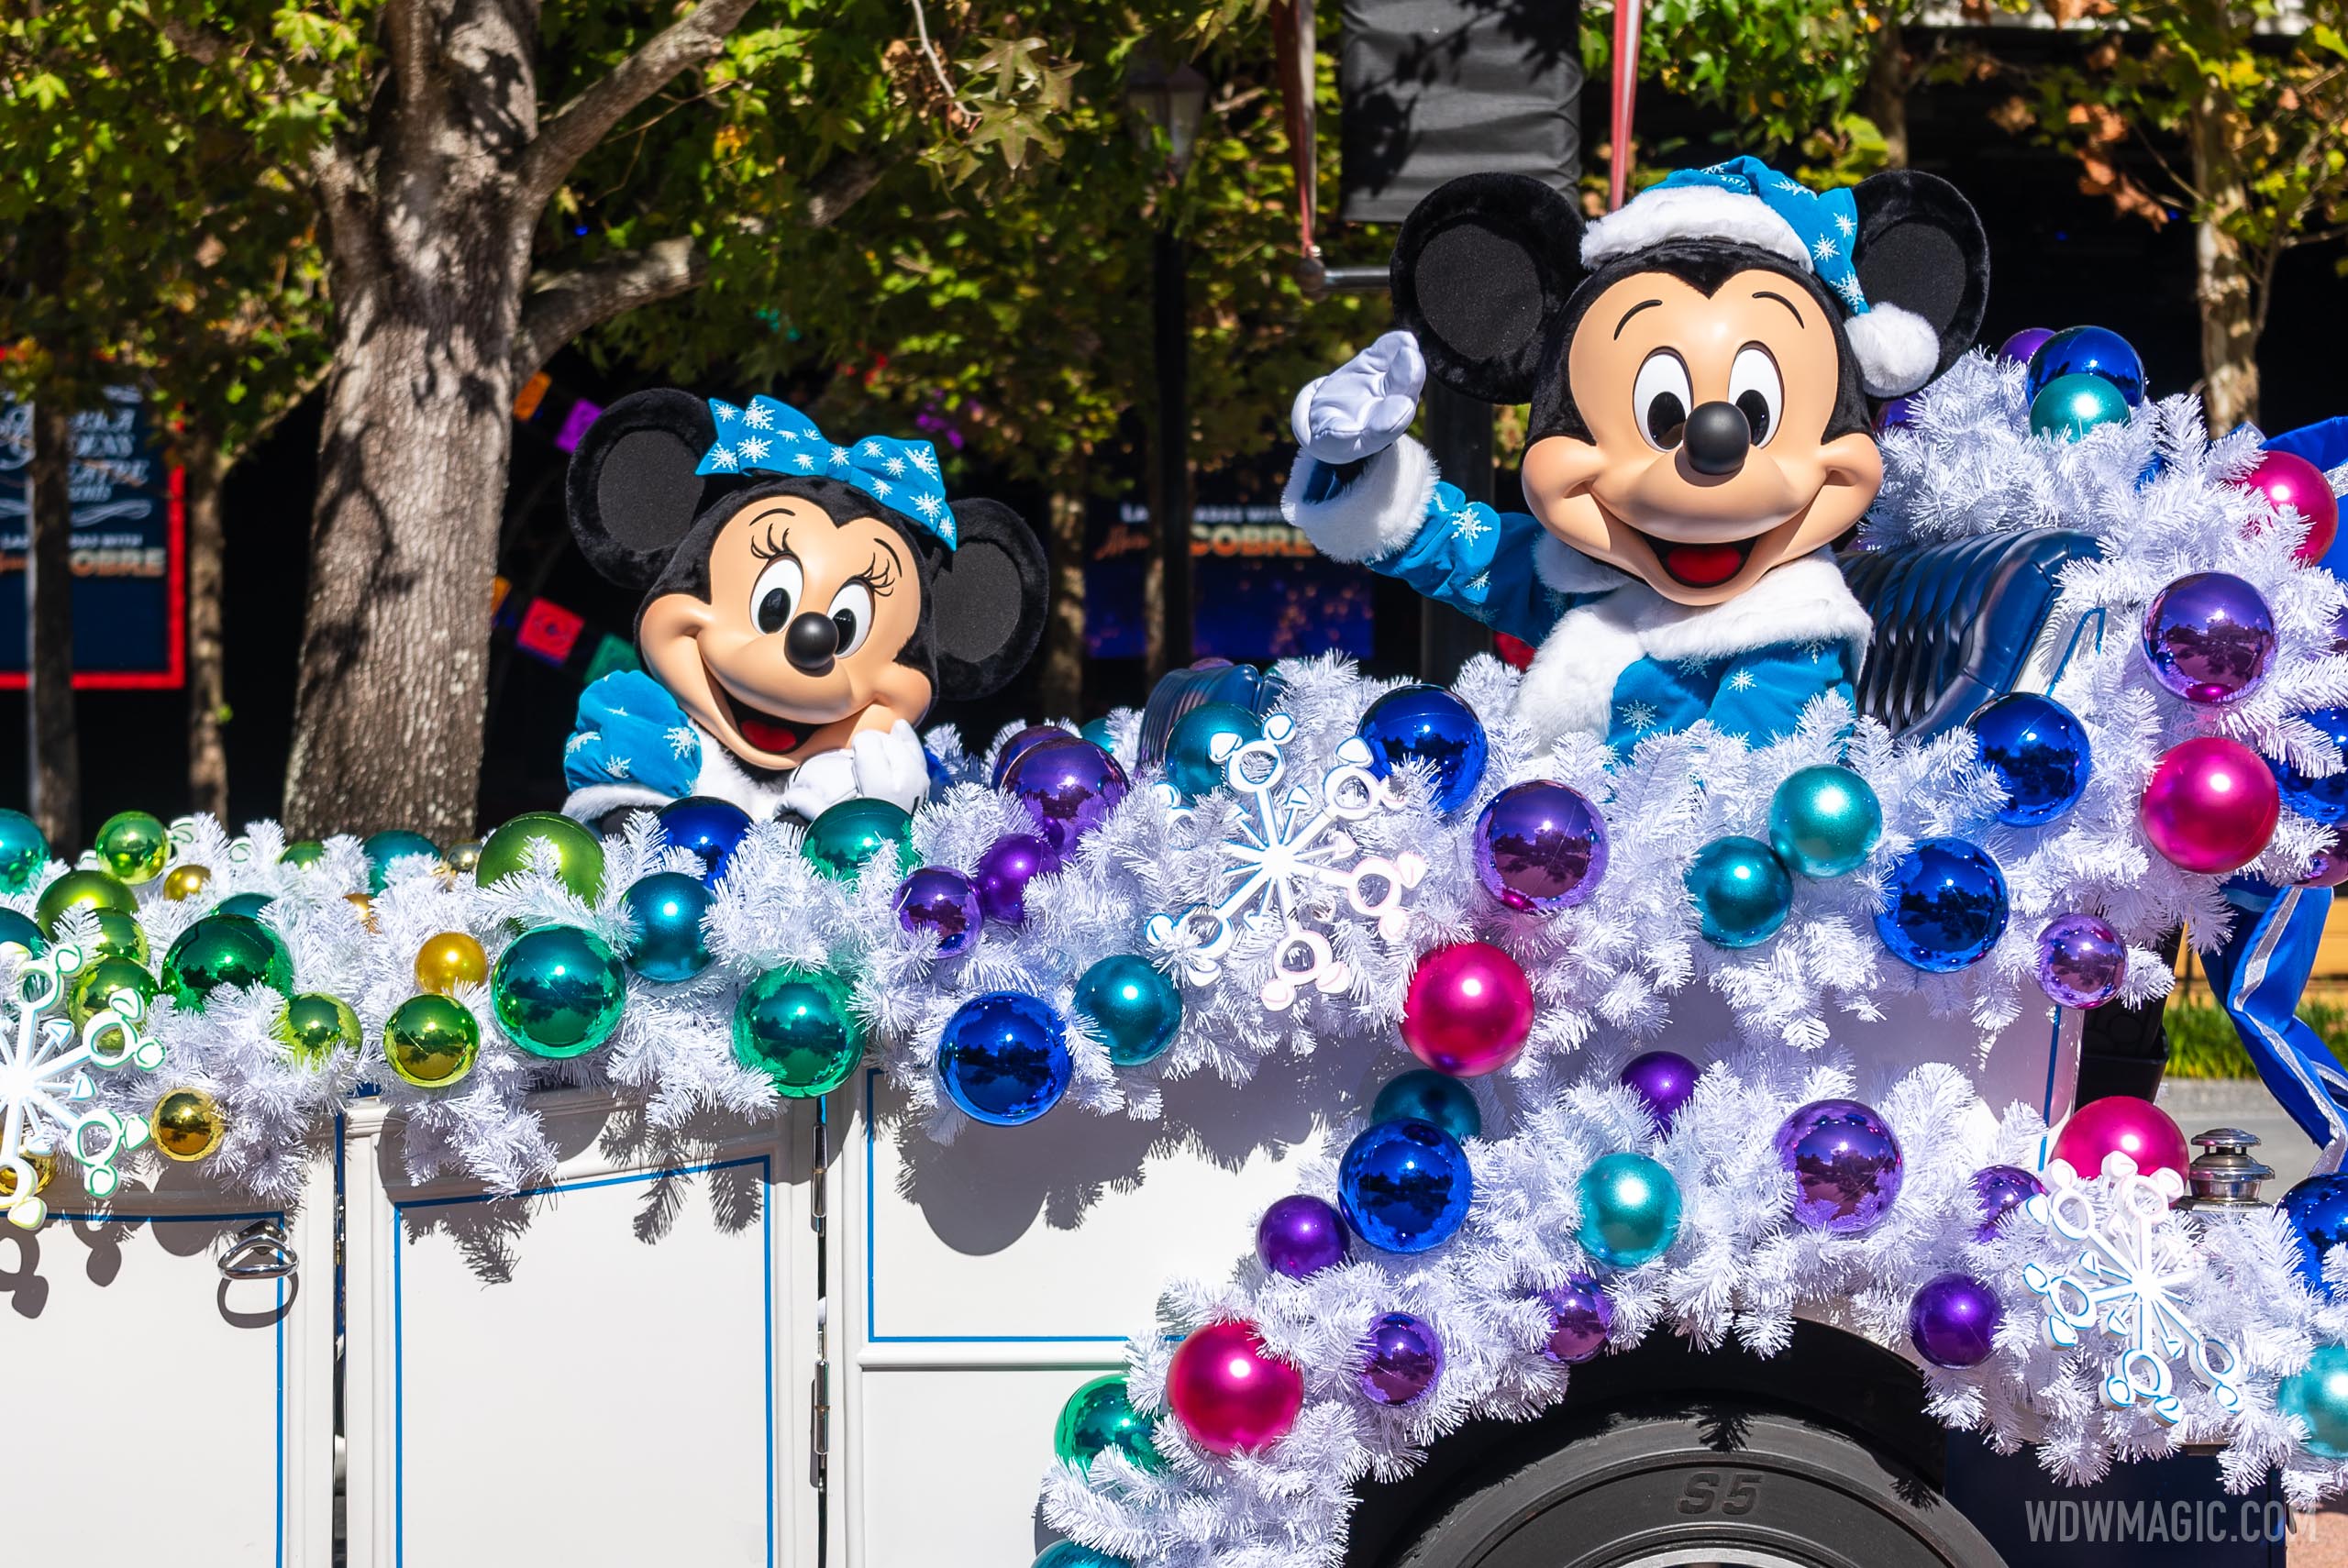 Disney characters will soon be visiting Walt Disney World Resort hotels